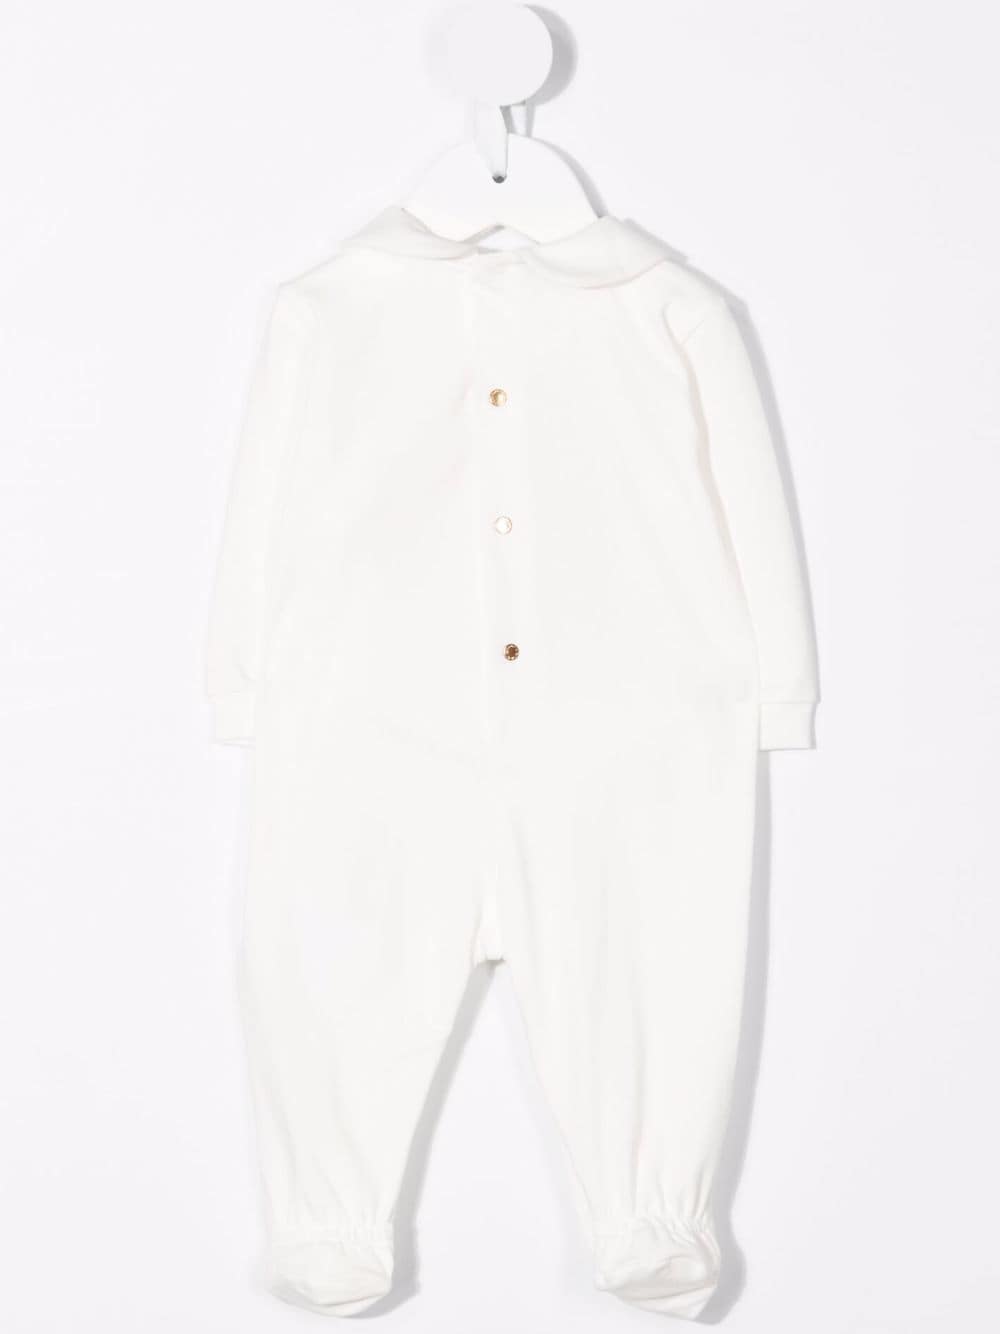 VERSACE BABY Medusa-print pajamas White/Pink - MAISONDEFASHION.COM